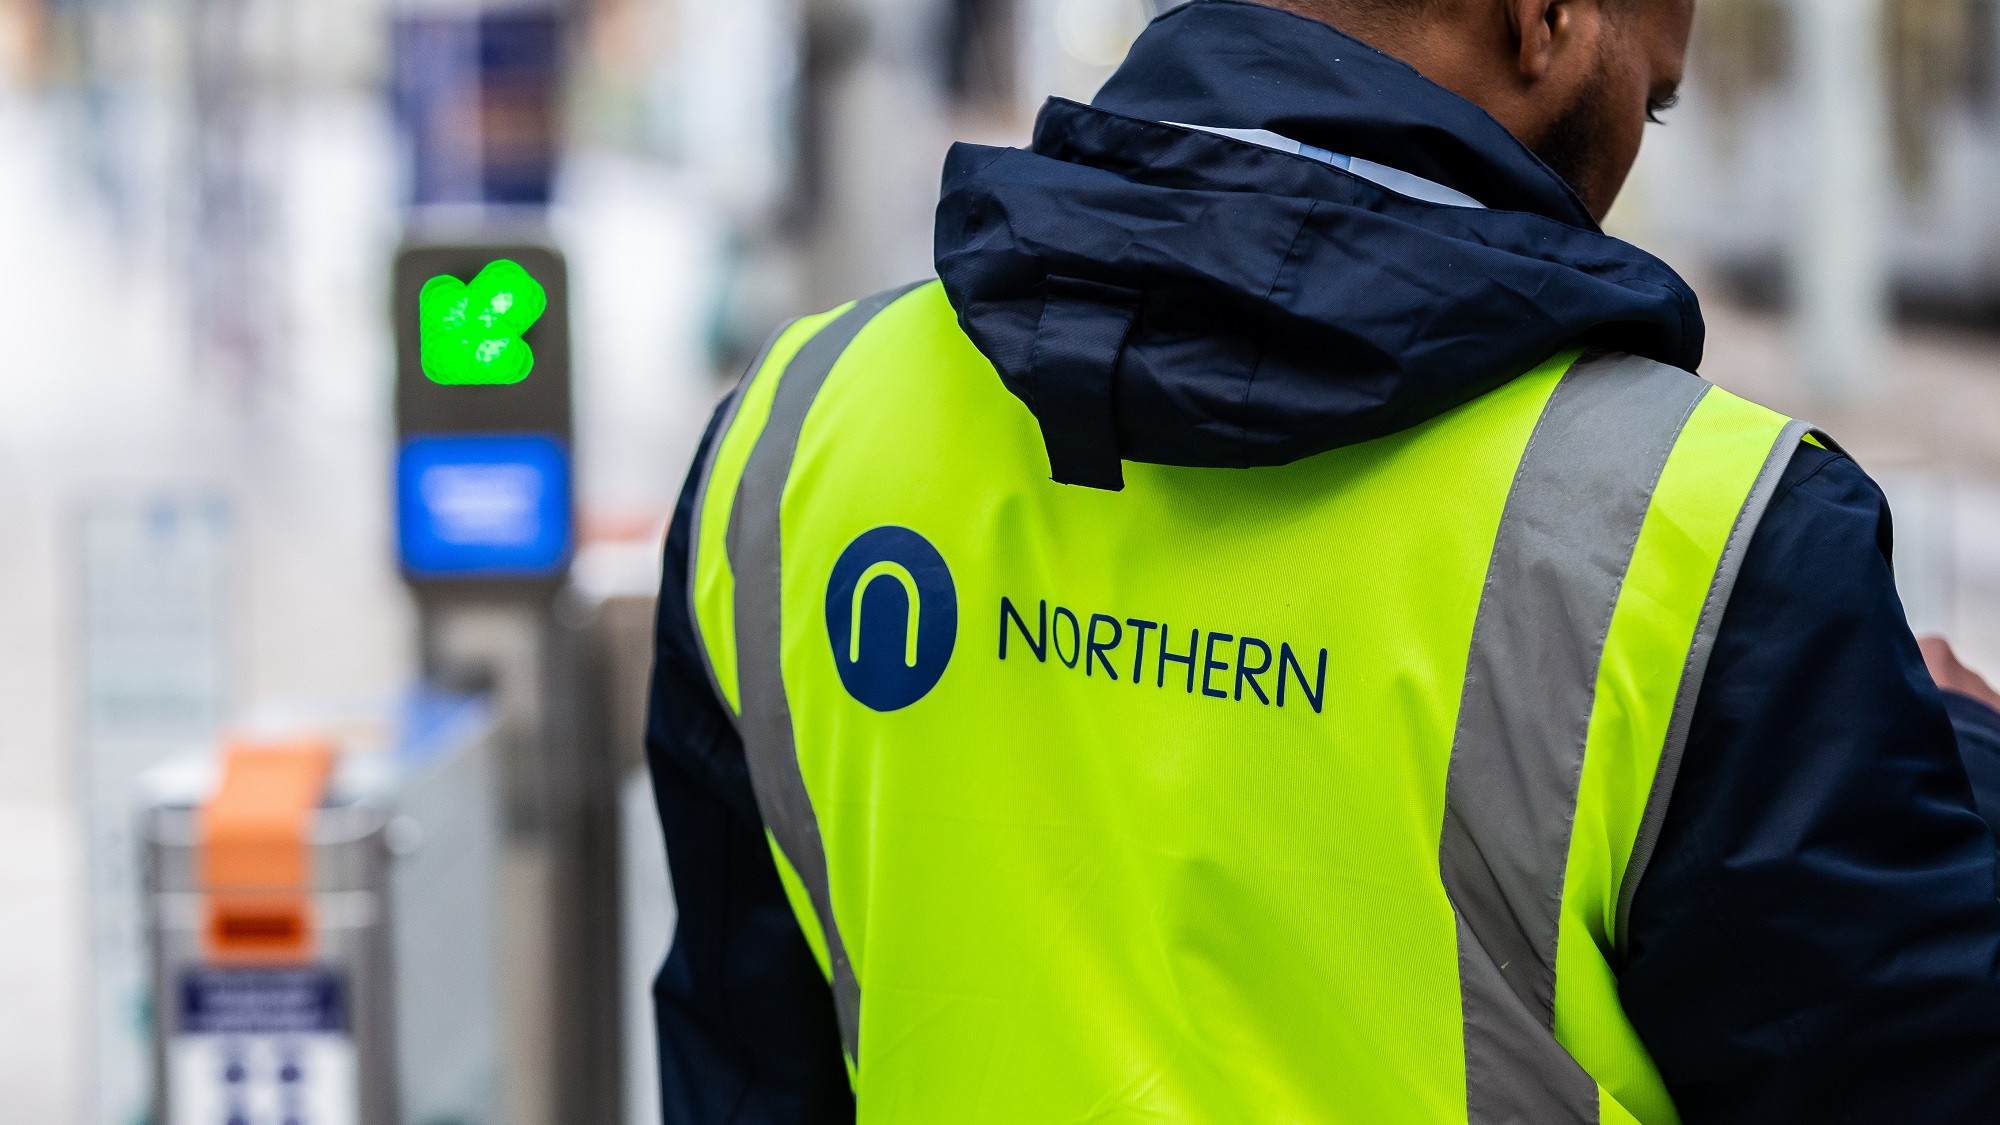 Image shows Northern staff member at ticket gateline